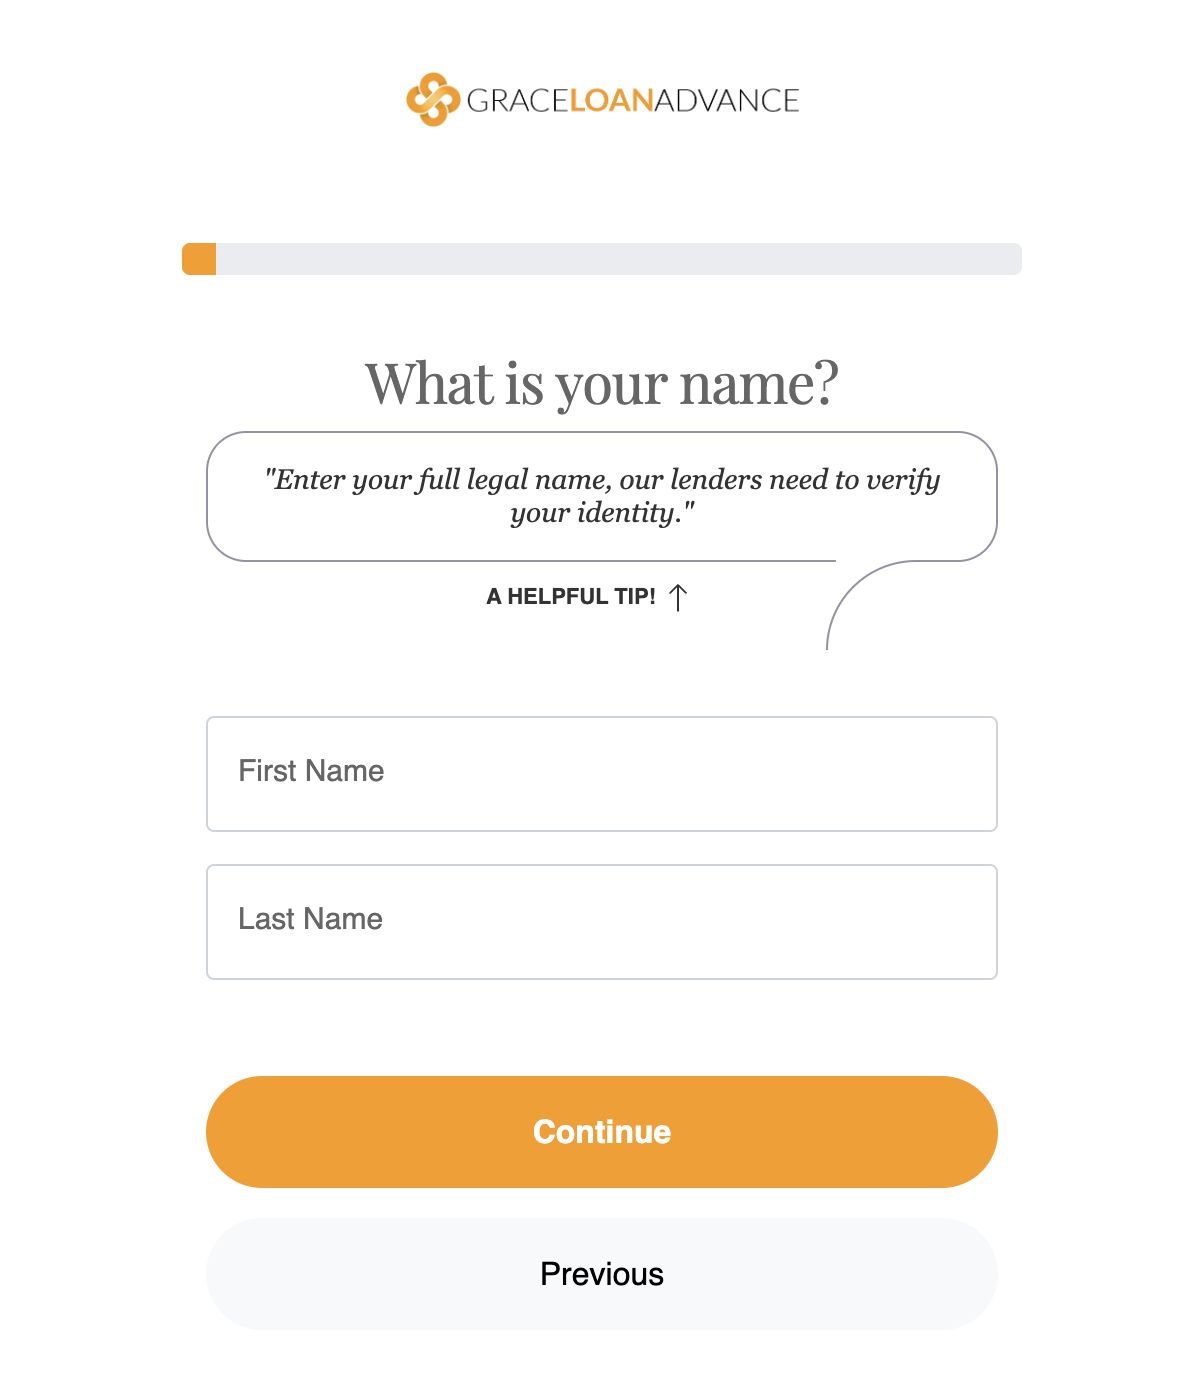 Second screenshot of Grace Loan Advance application